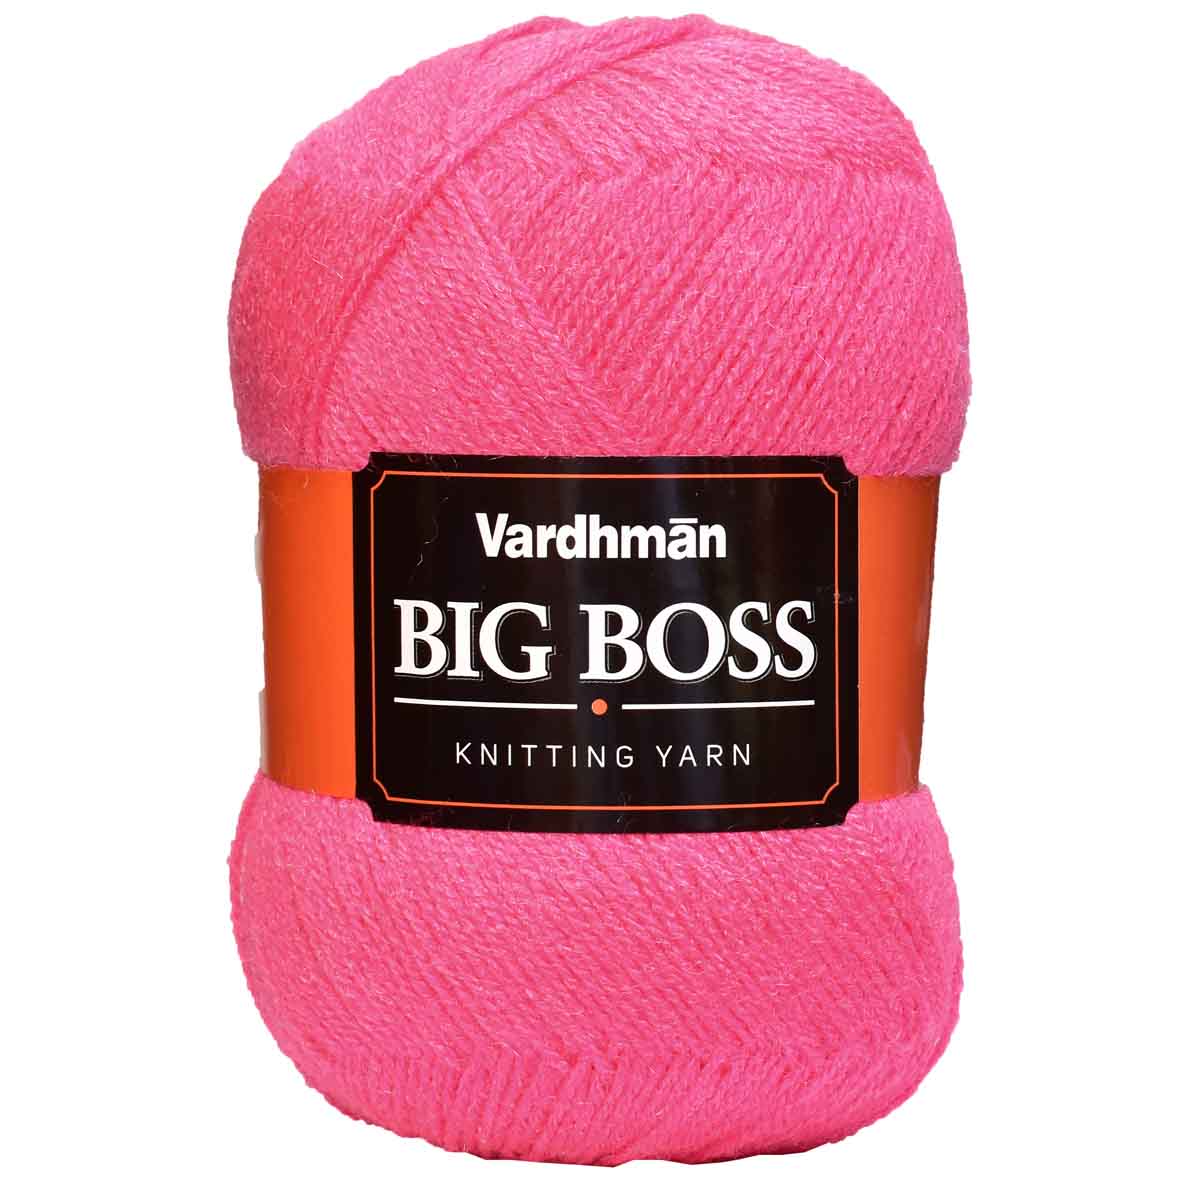 Vardhman Bigboss Knitting Yarn